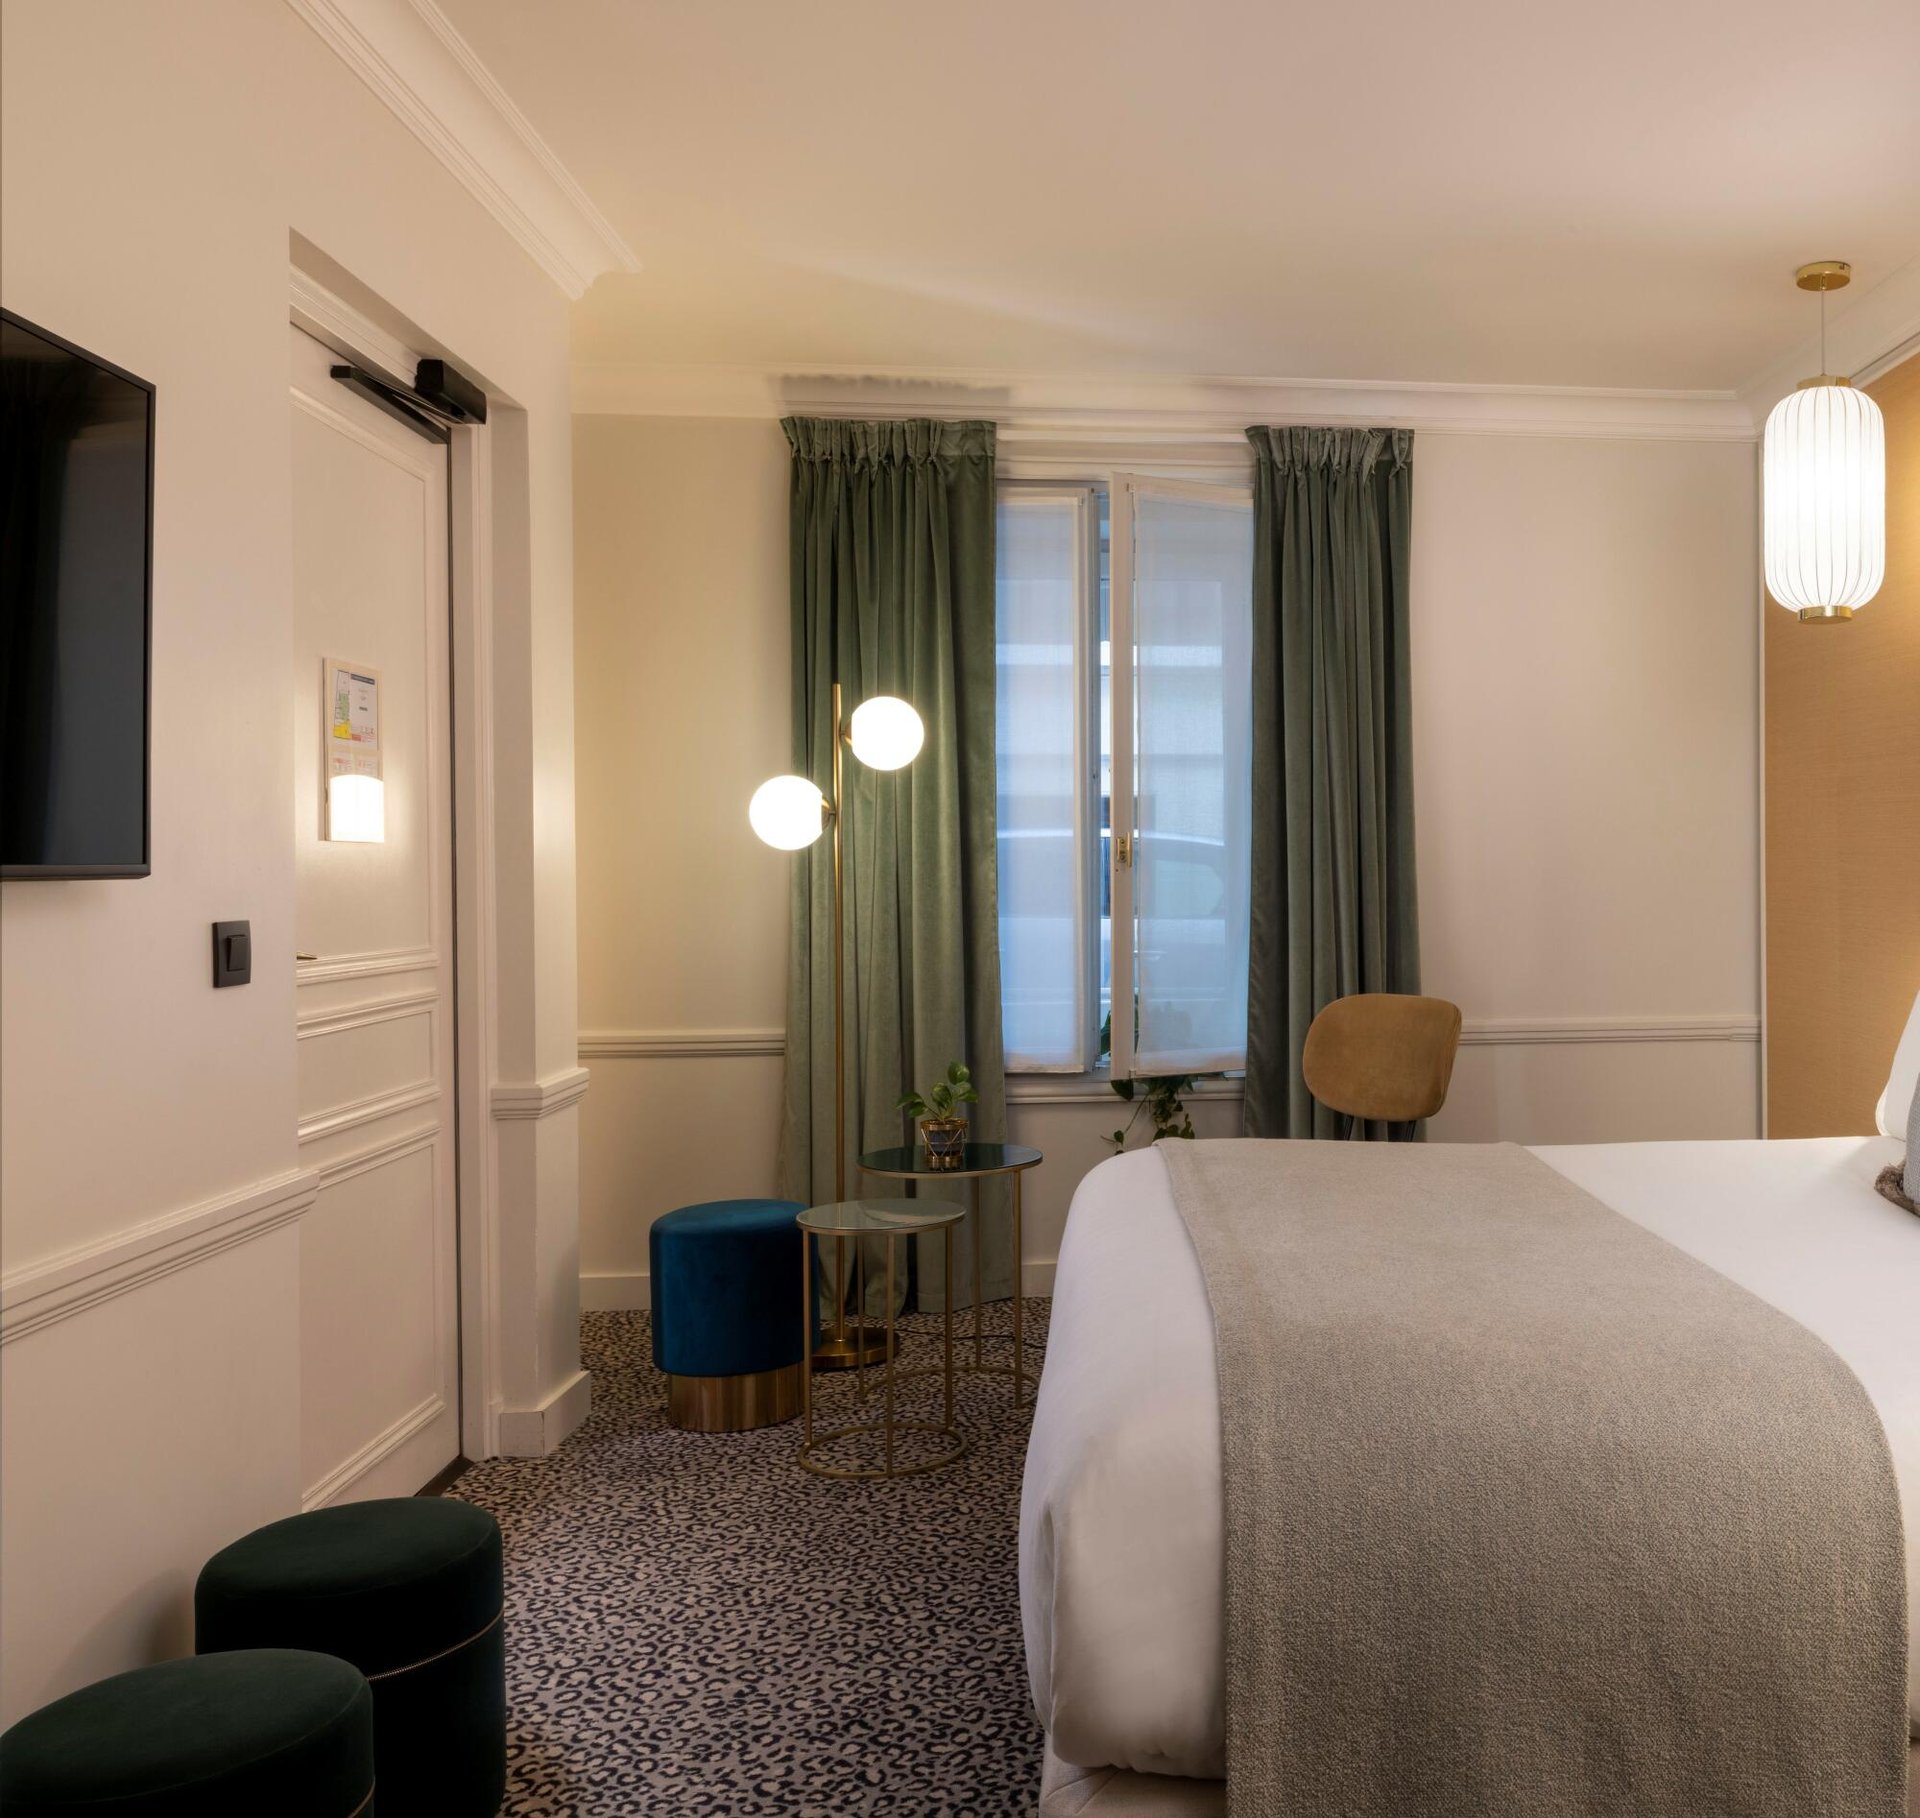 Hotel Gramont Paris, close to Opera Garnier, PMR single bedroom